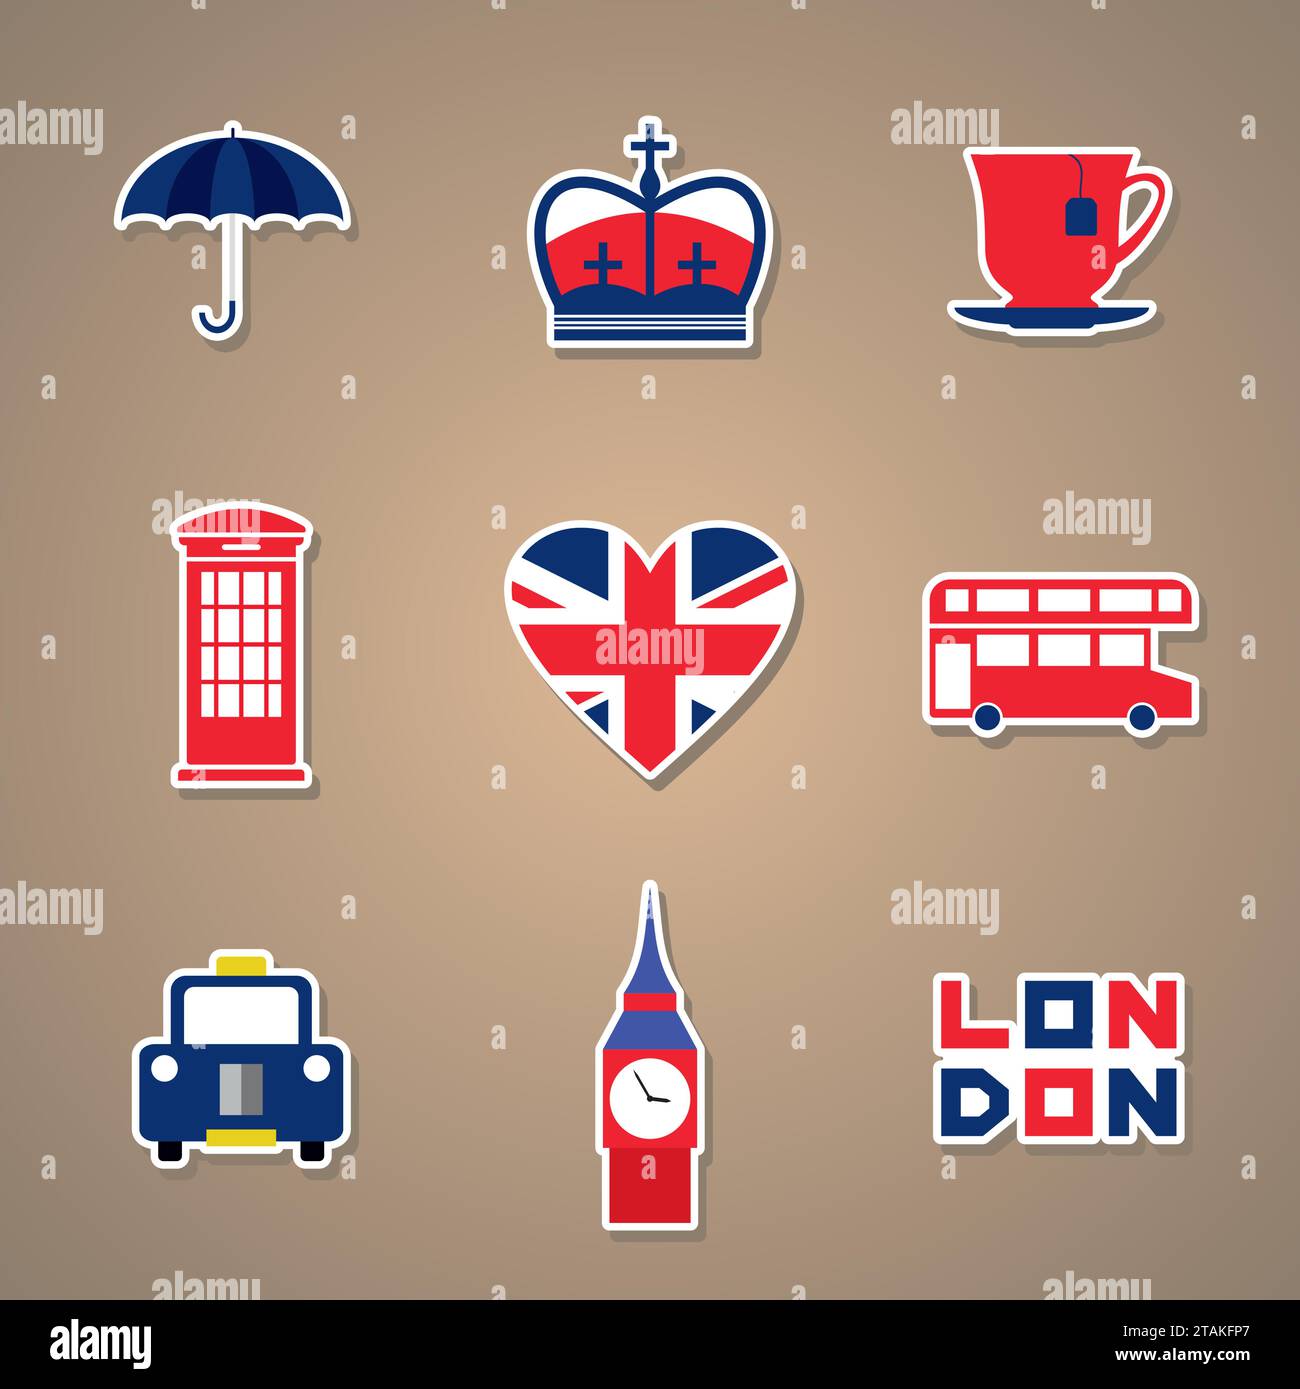 London Icons set Stickers. Vector illustration Flat design Stock Vector